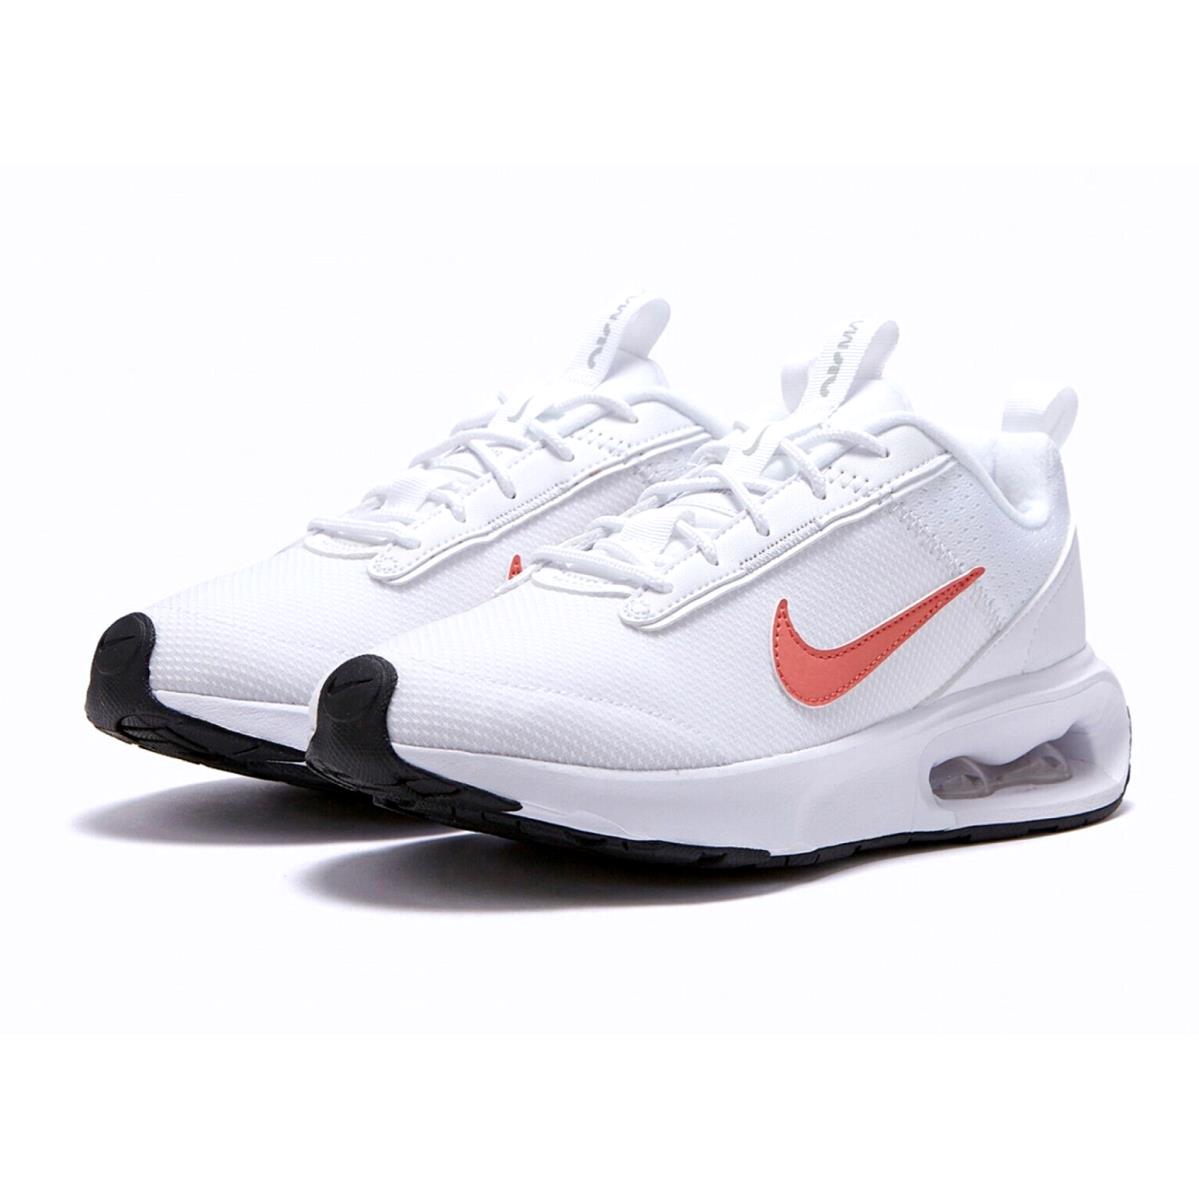 Nike Air Max Intrlk Lite Mens Size 8.5 Shoes DV5695 103 White/photo wm sz 10 - White